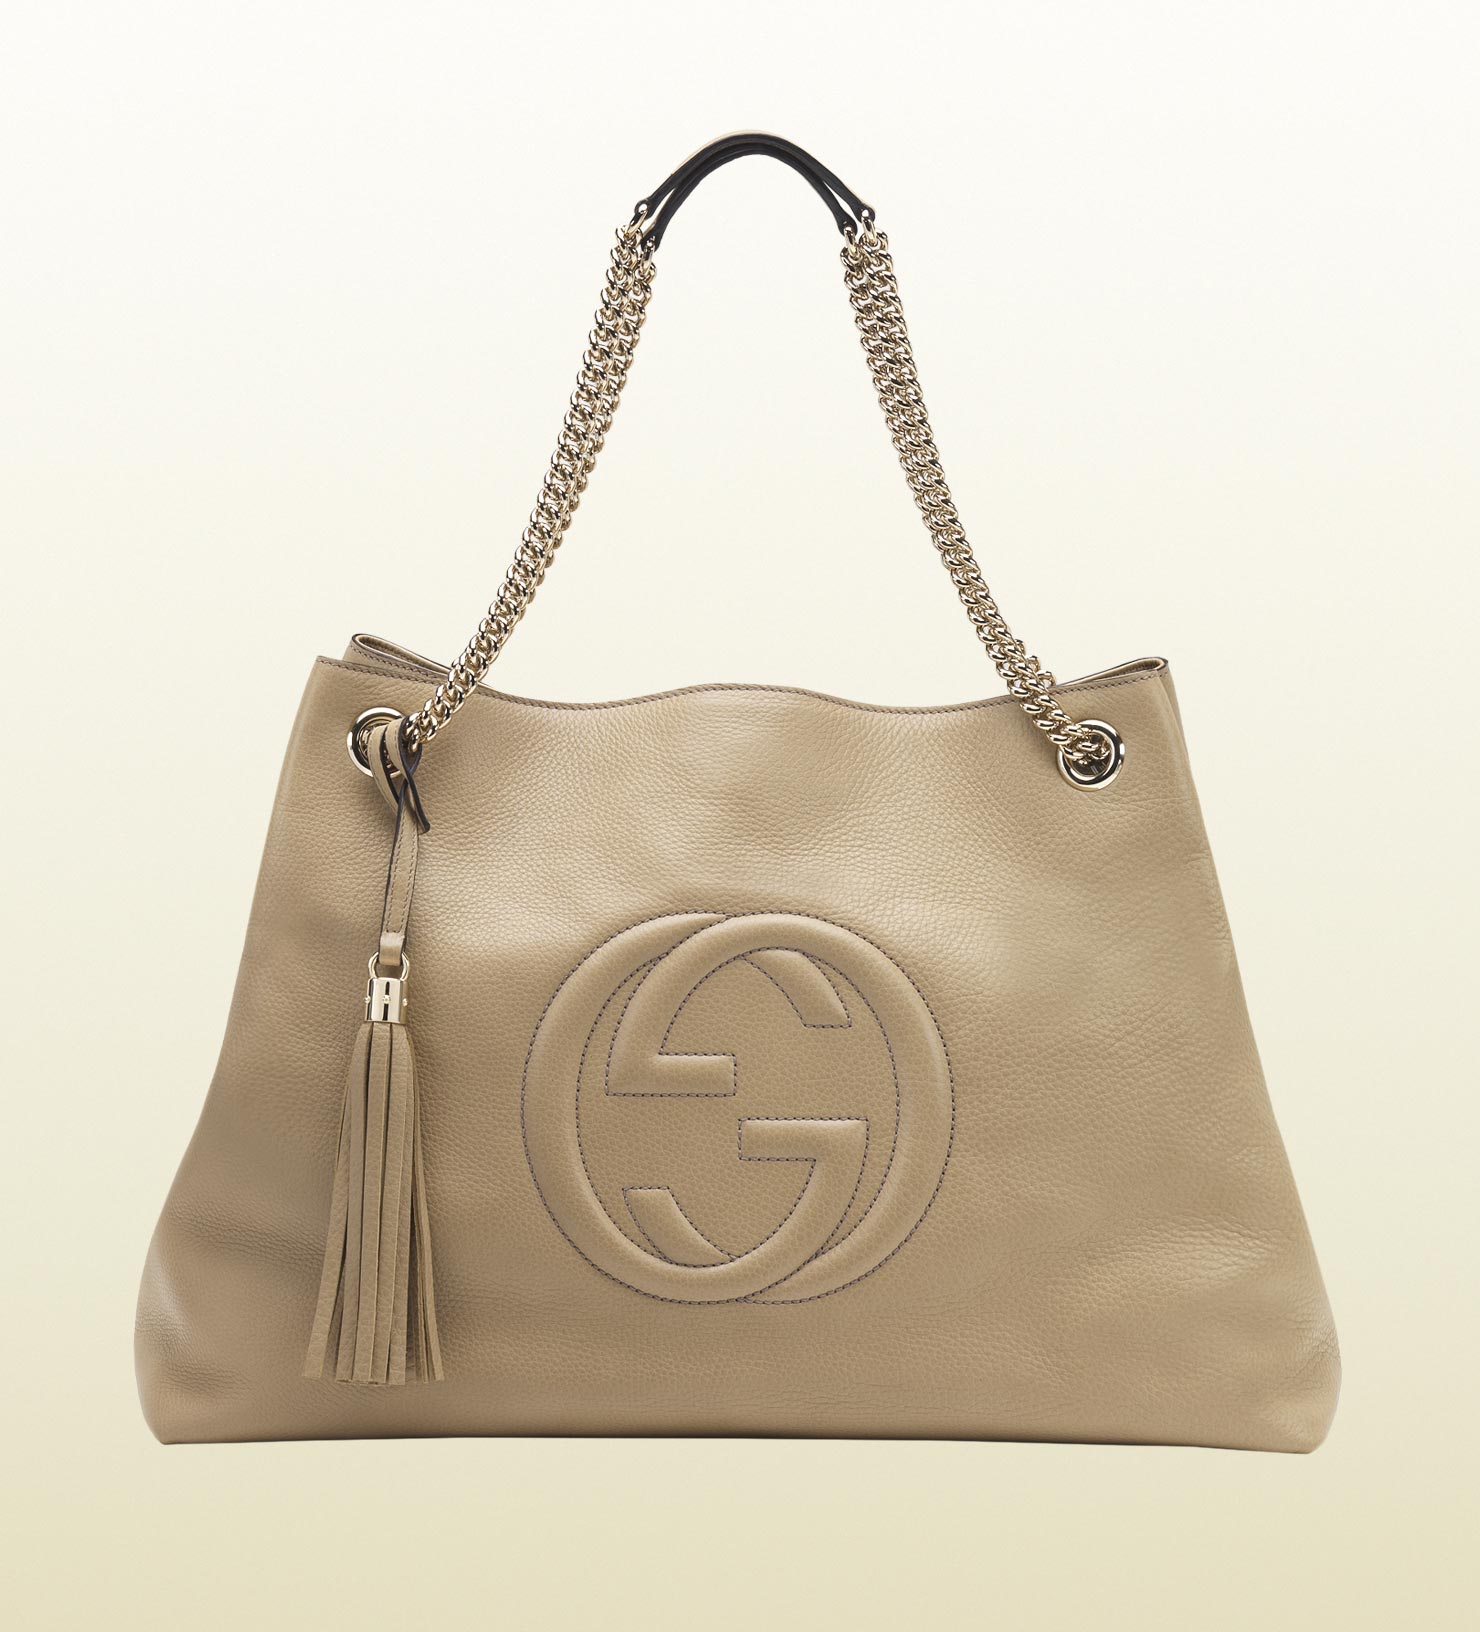 Gucci Soho Leather Shoulder Bag in Beige (cream) | Lyst